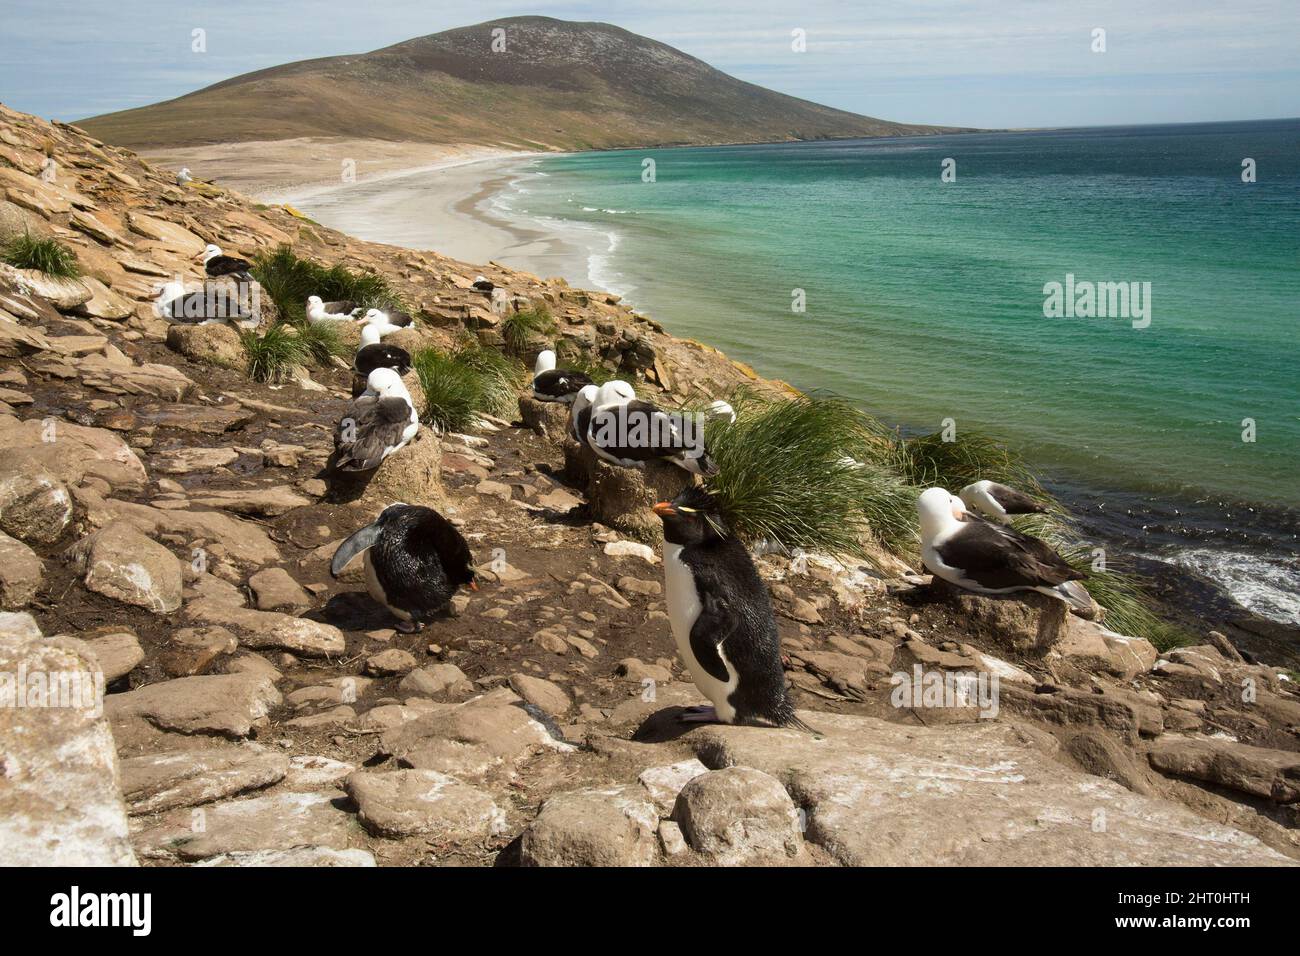 Southern rockhopper penguin (Eudyptes chrysocome) members of a colony nesting on a rocky slope above a bay. Saunders Island, Falkland Islands Stock Photo